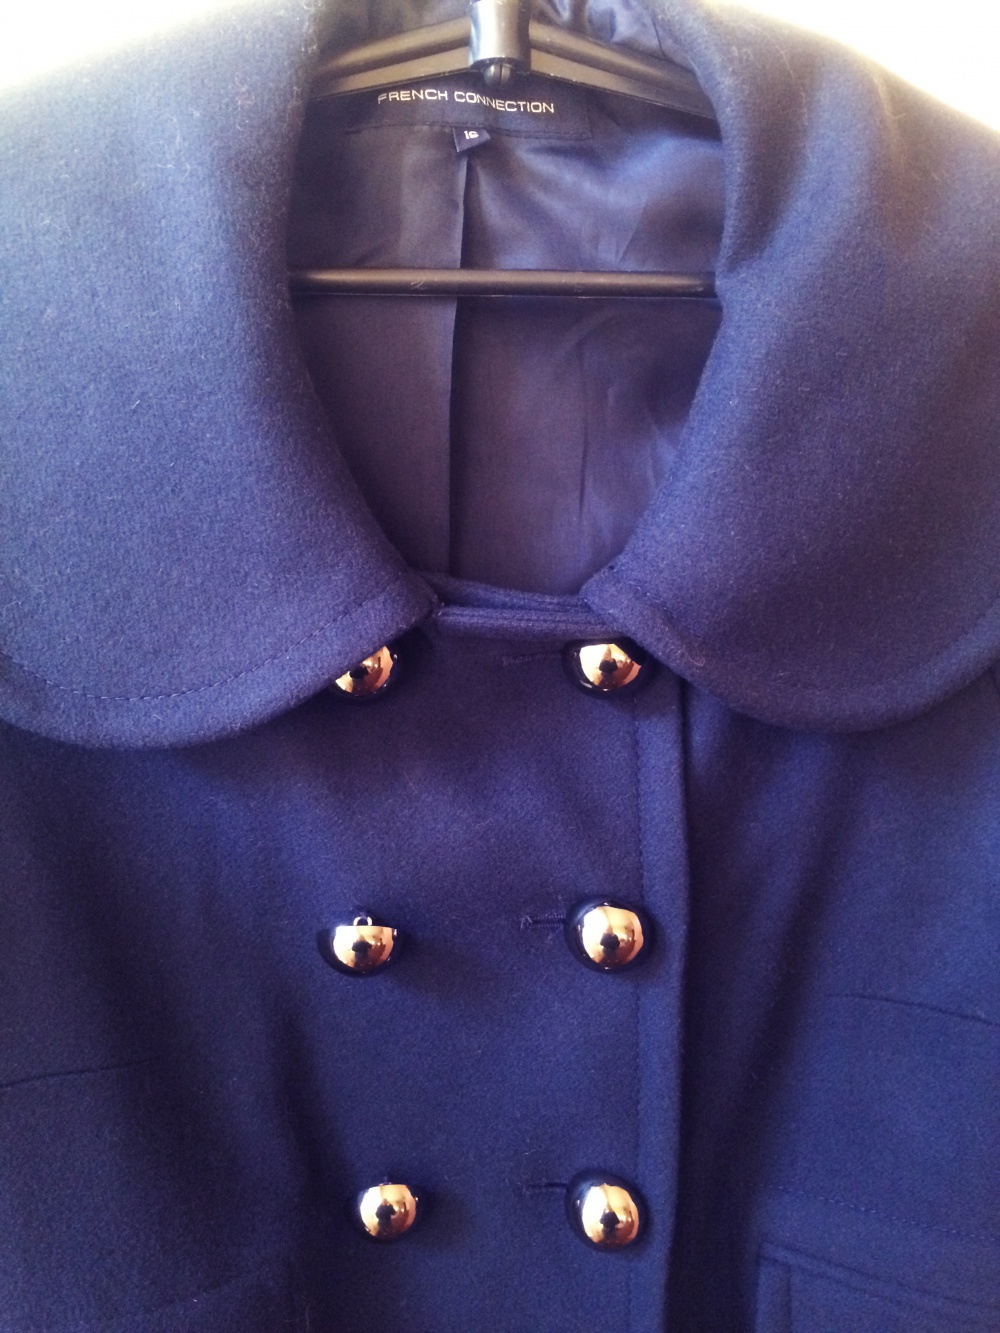 Новое тёмно-синее пальто French Connection (16 UK)